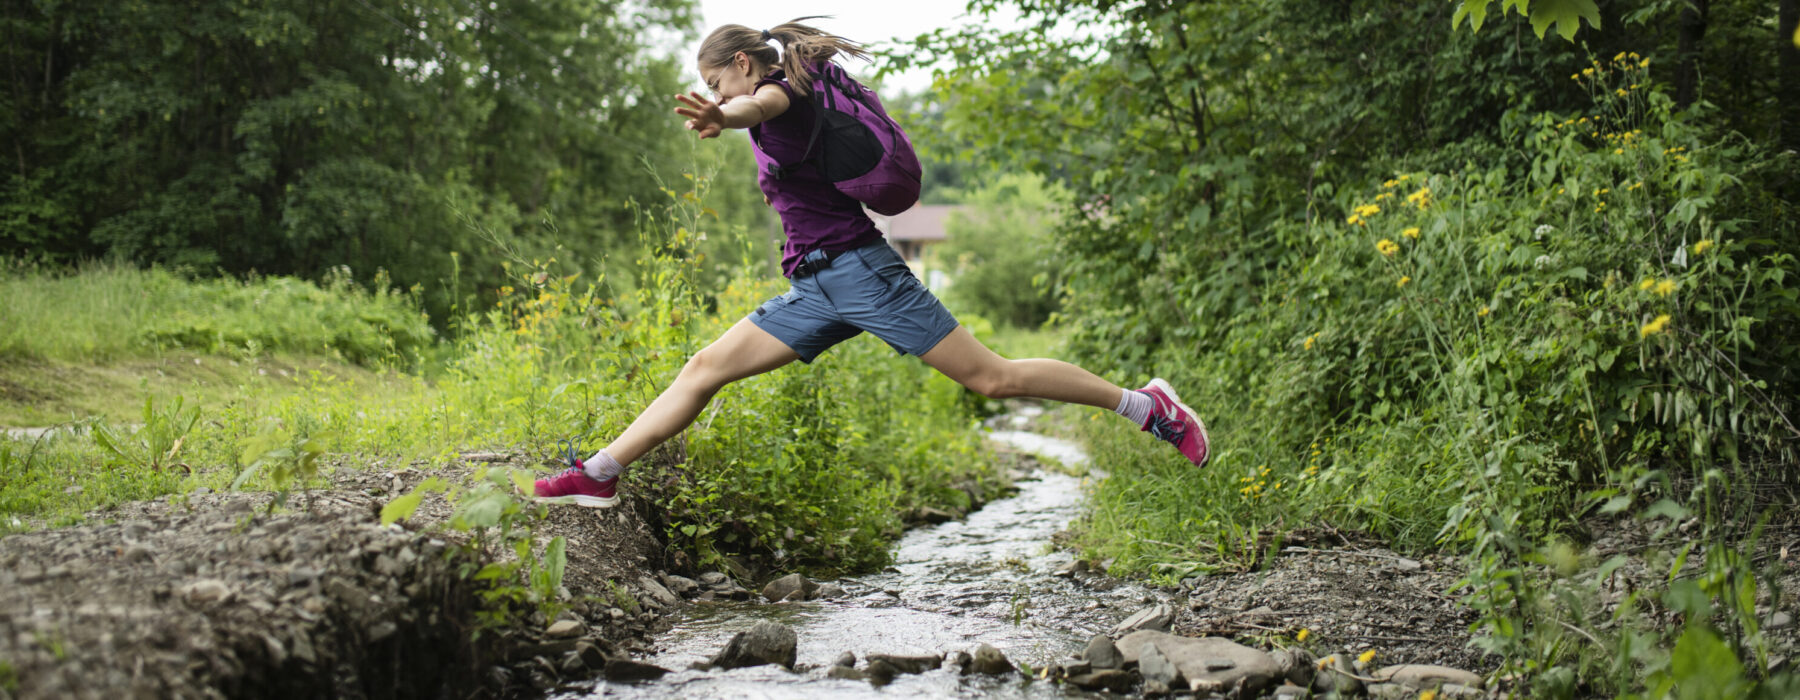 A girl jumping across a stream